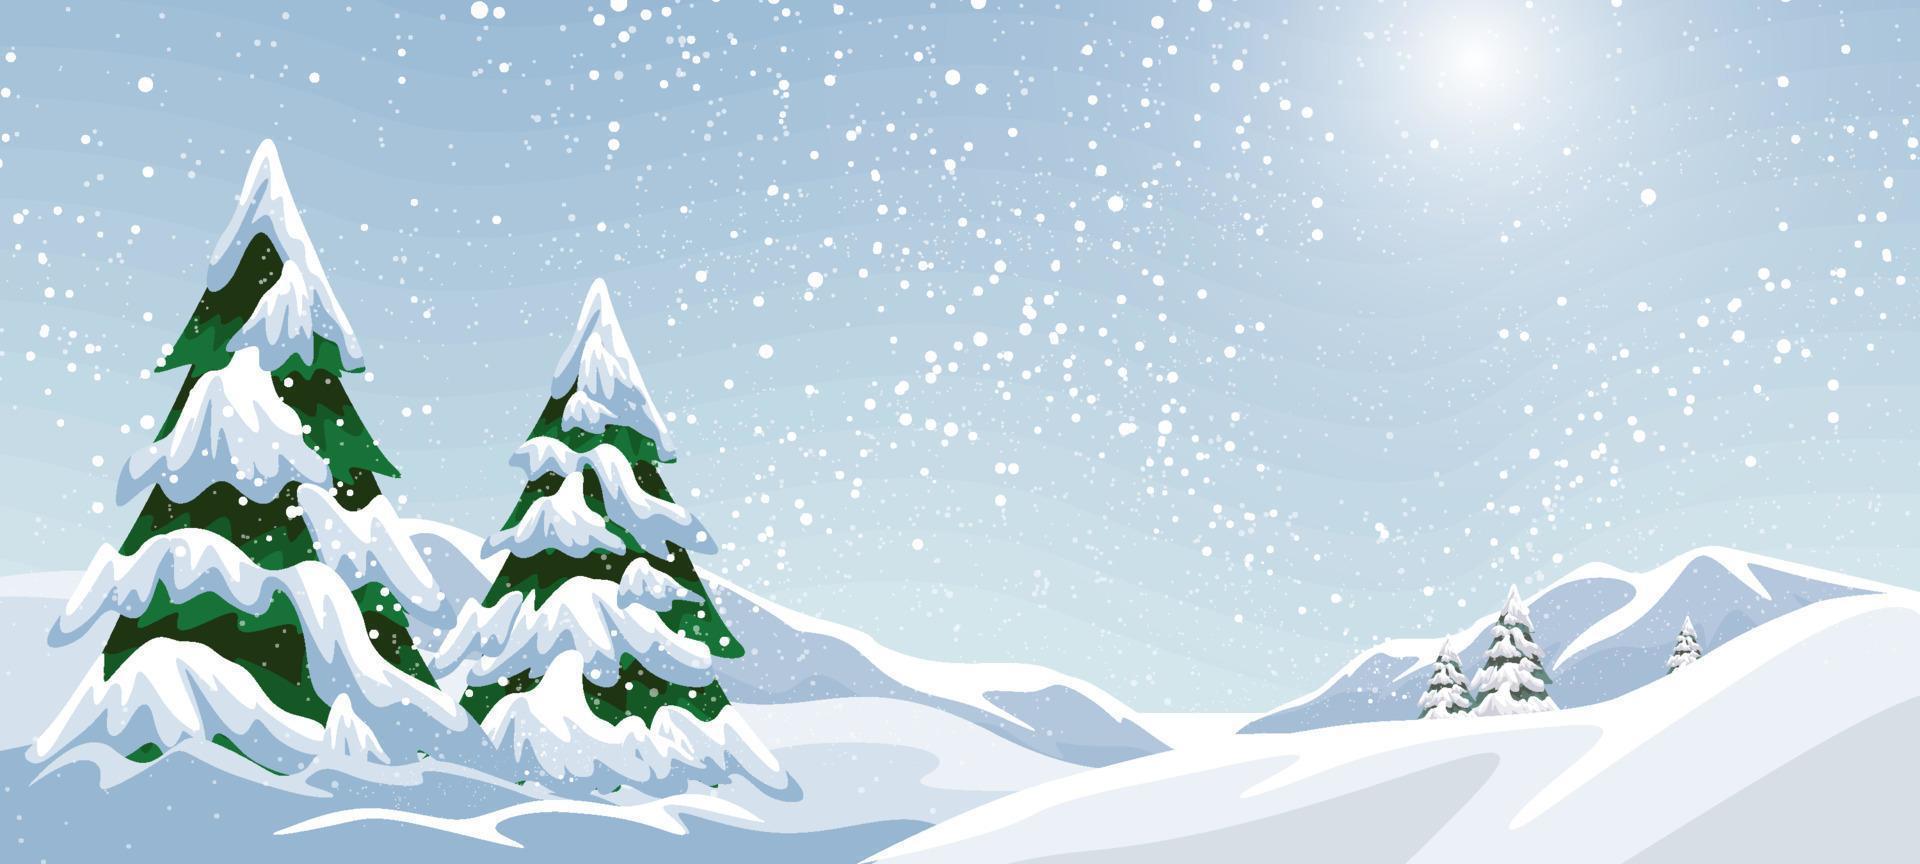 Nature Winter Scenery Landscape Background vector